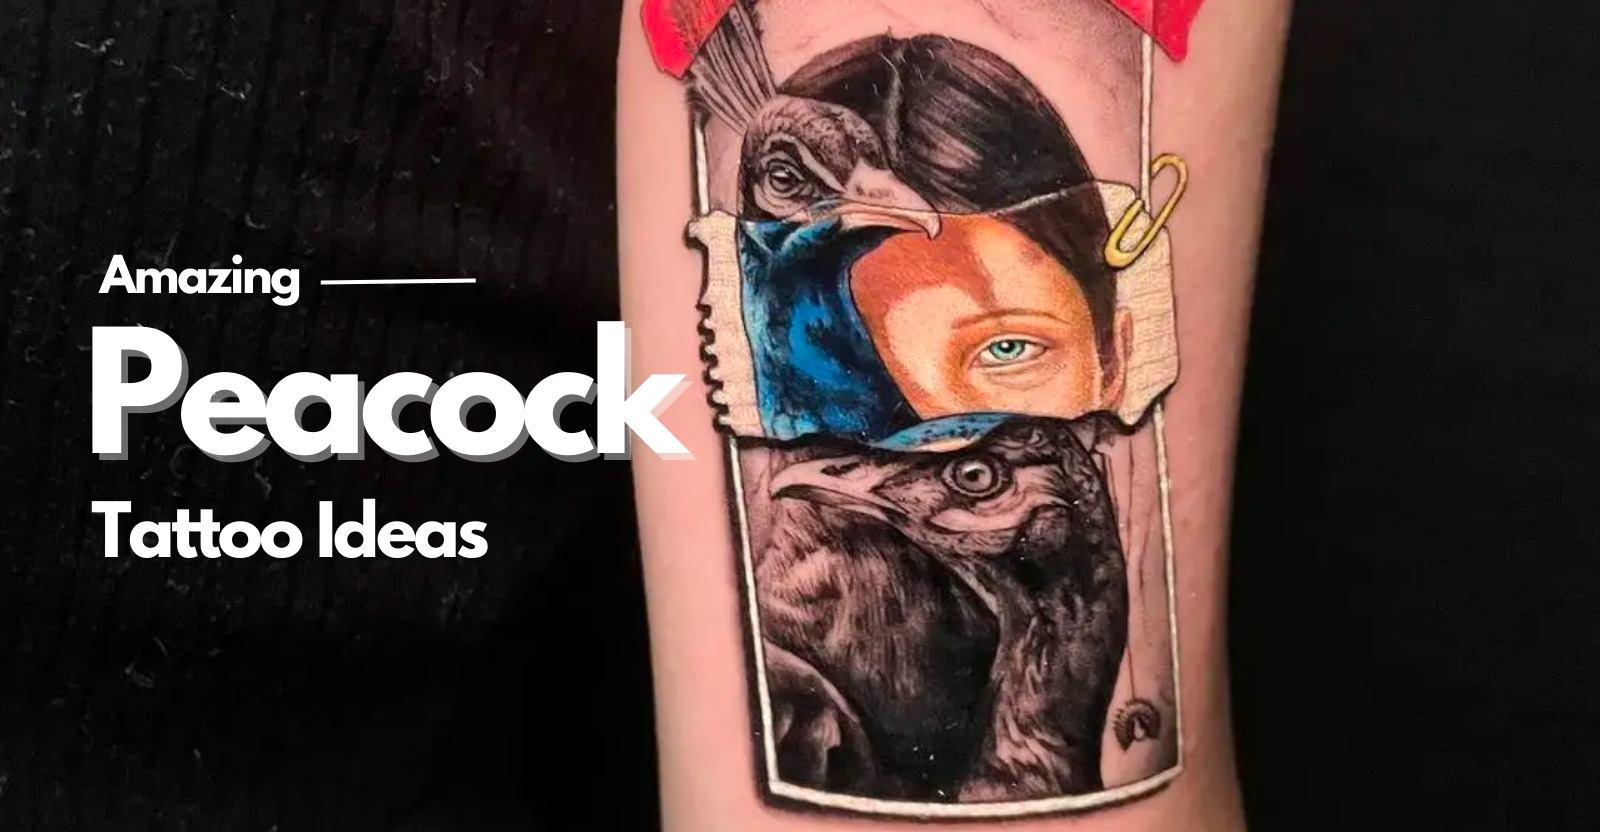 Peacock tattoo design ideas